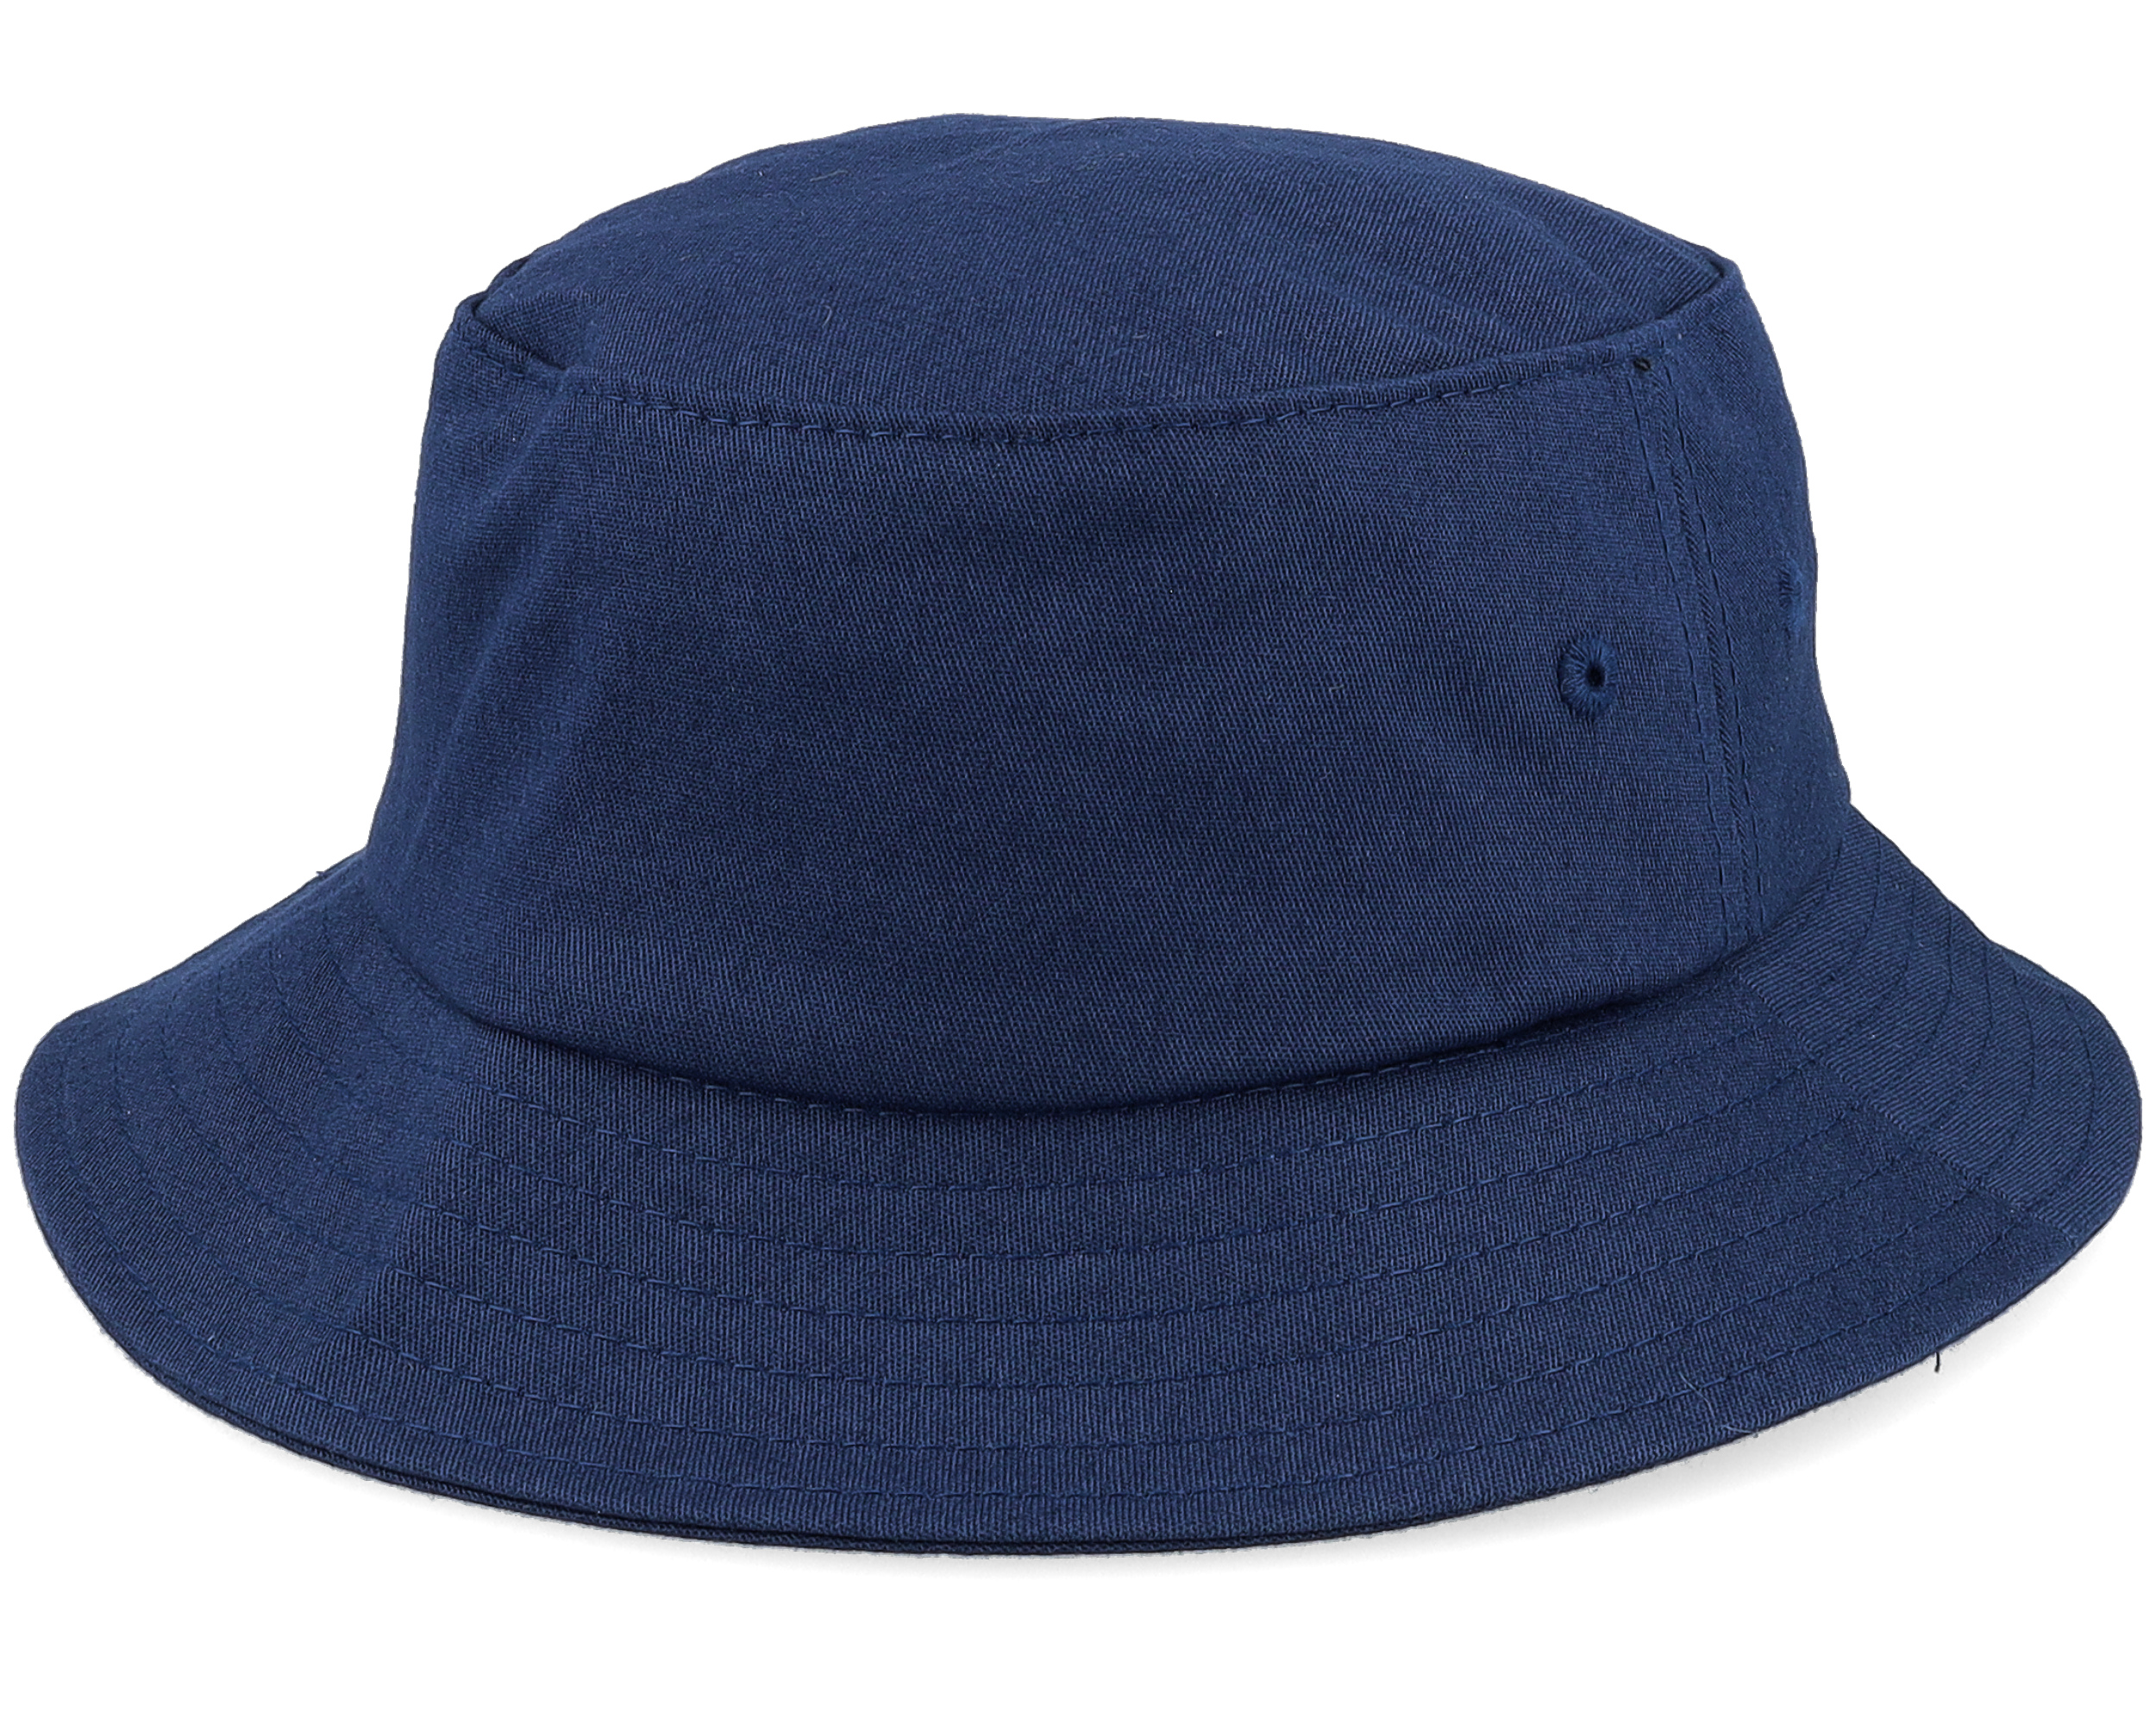 Kids Navy Bucket hat - Flexfit Flexfit